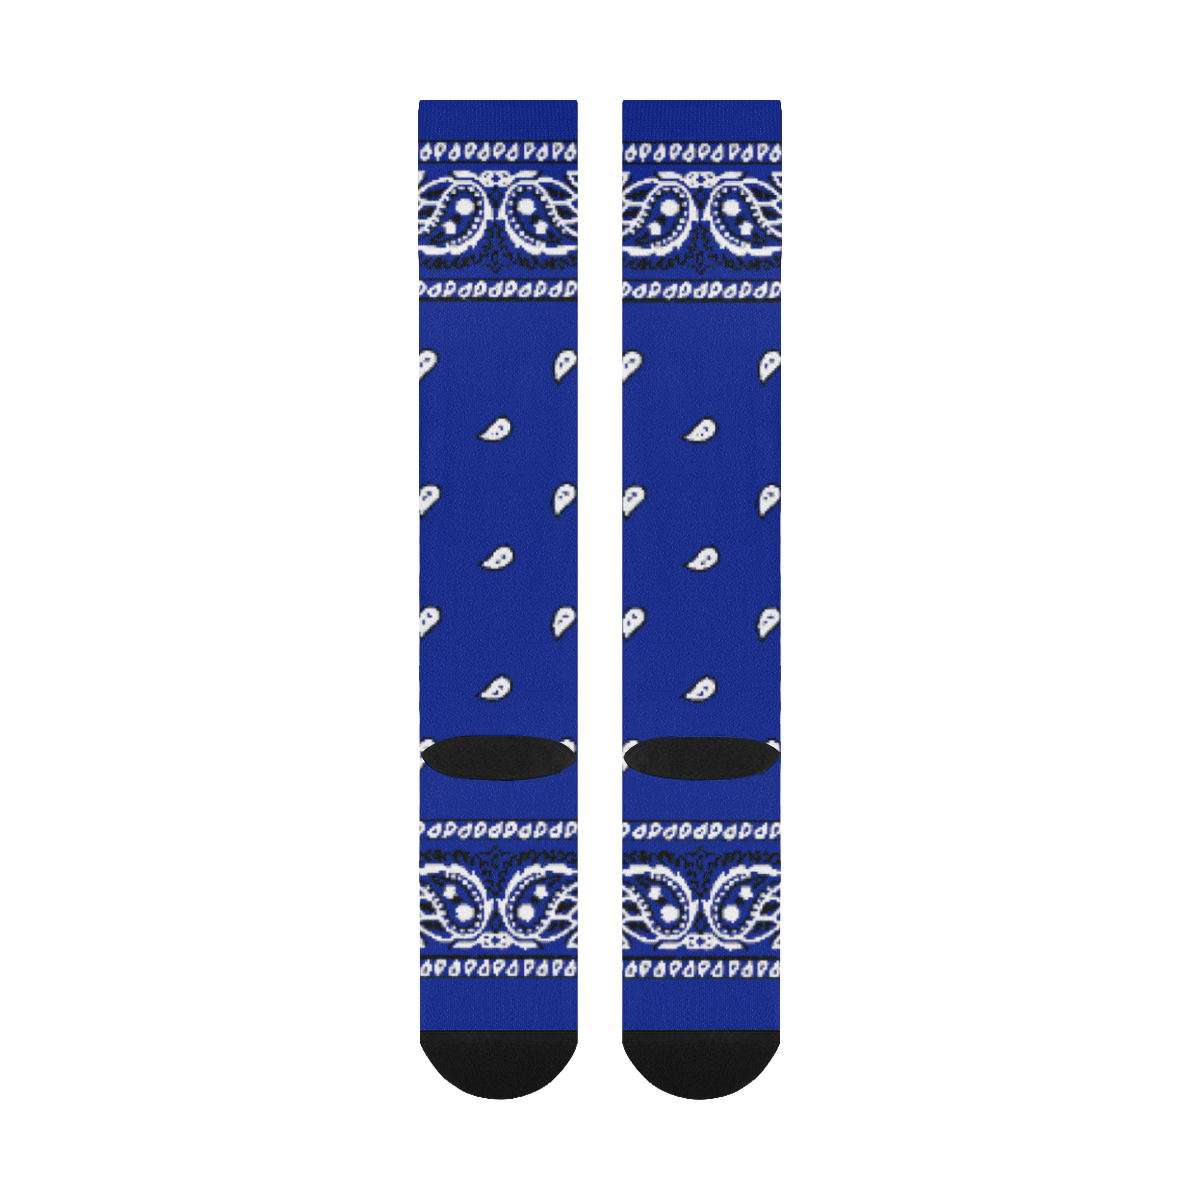 KERCHIEF PATTERN BLUE Over-The-Calf Socks